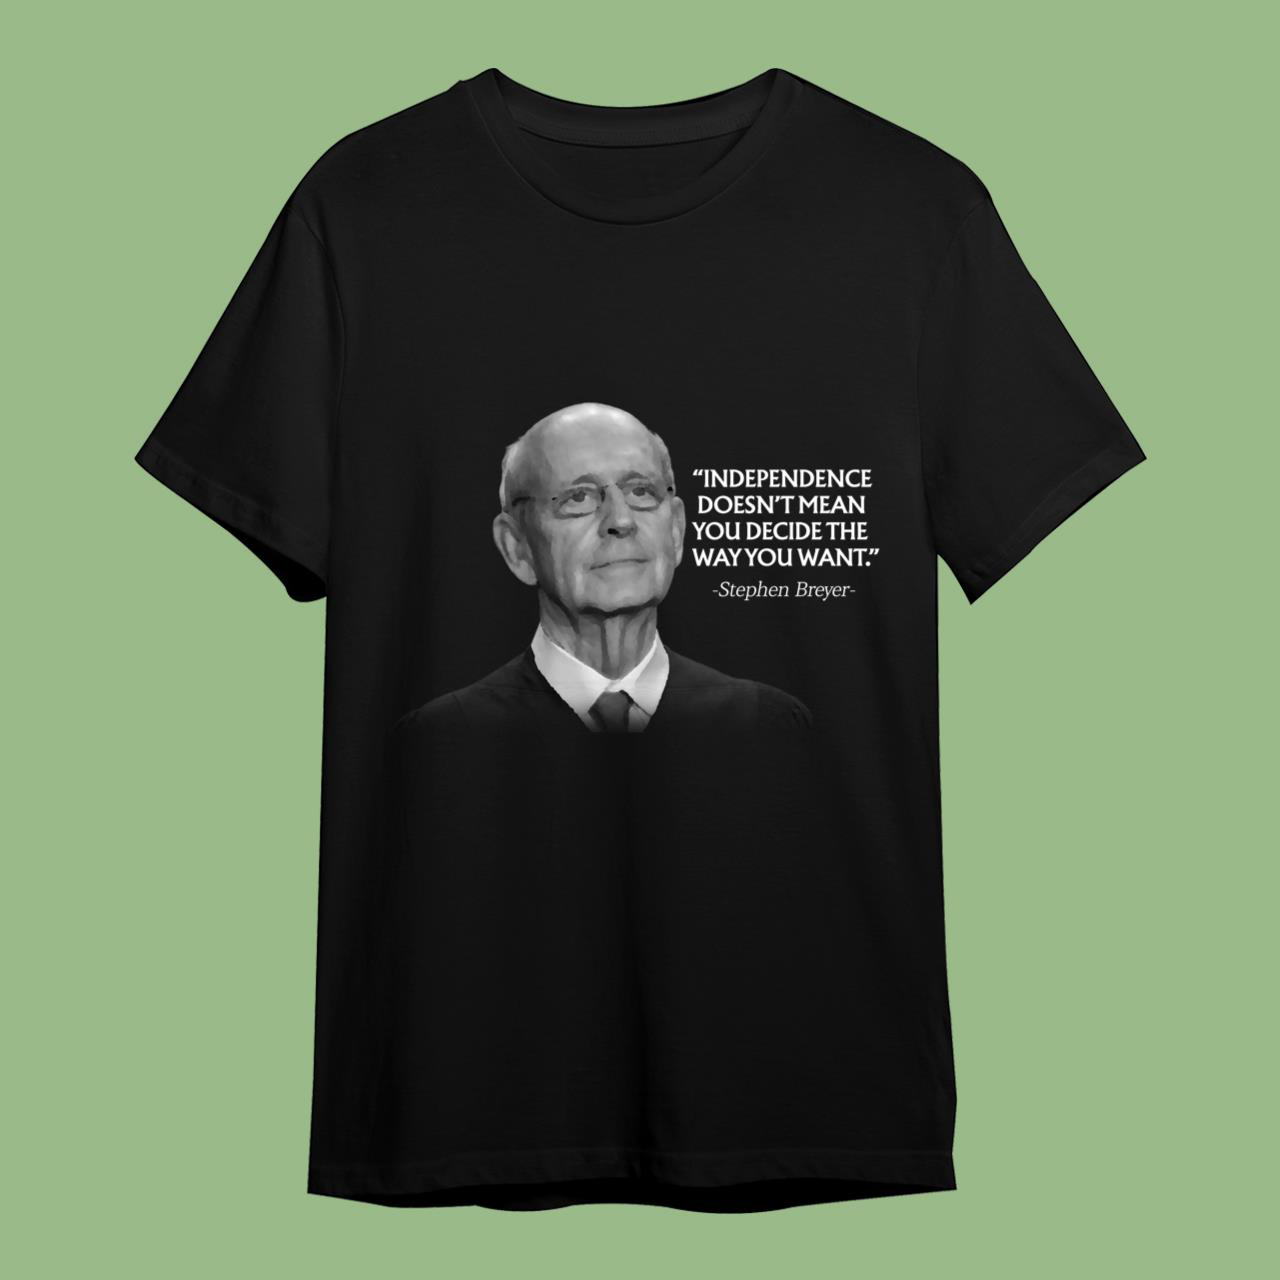 Stephen Breyer Quote T-Shirt